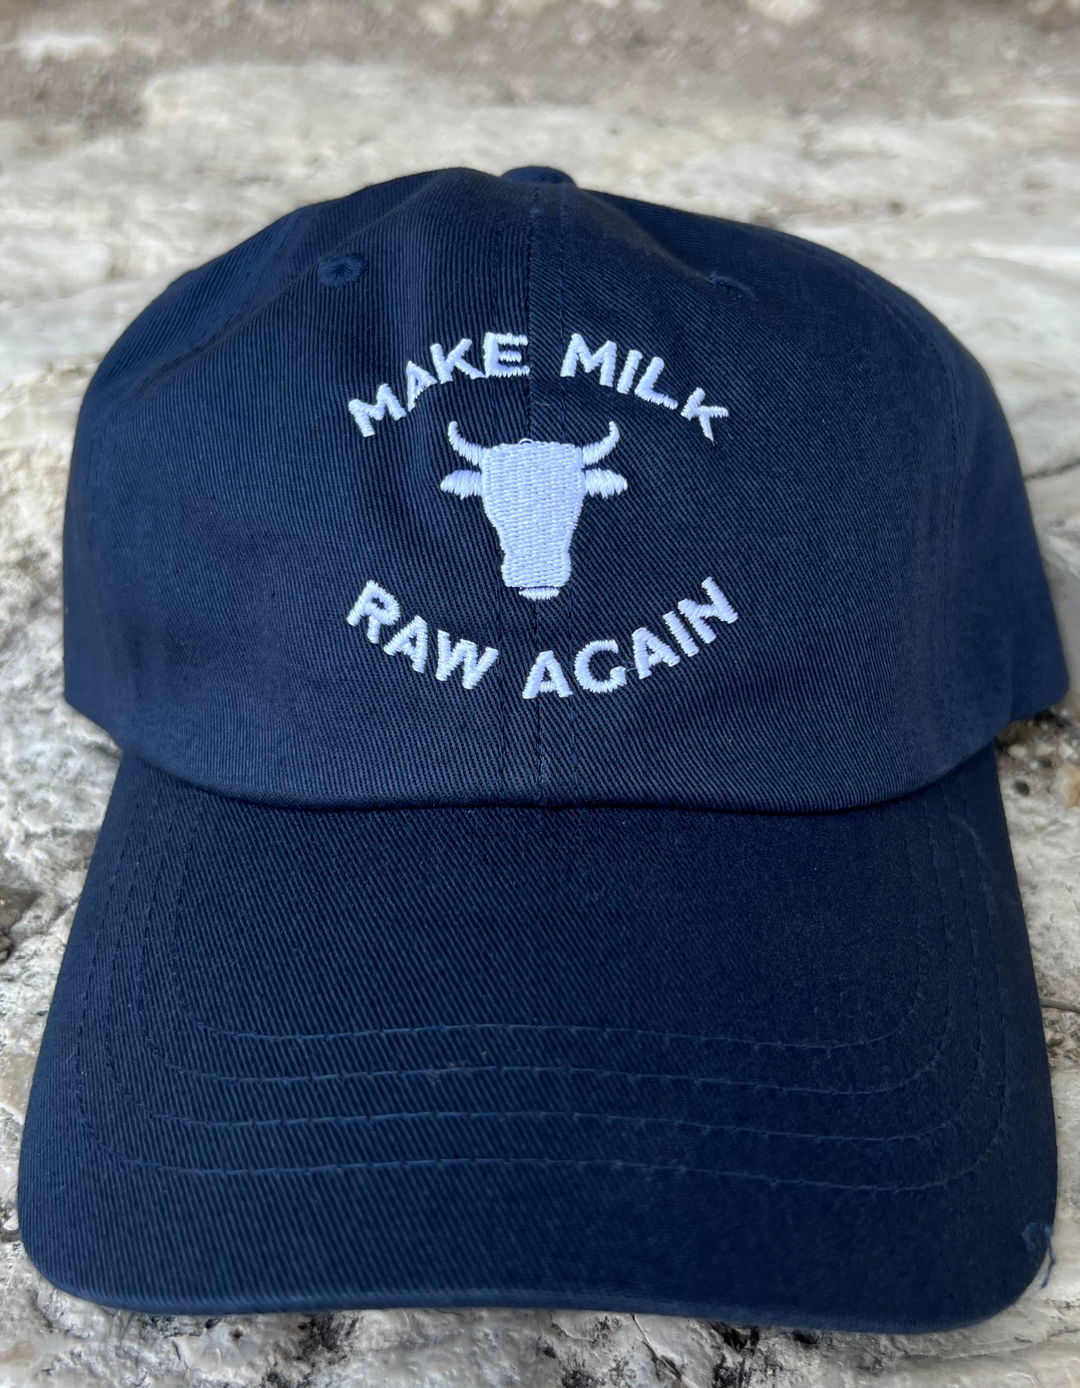 Make Milk Raw Again Hats